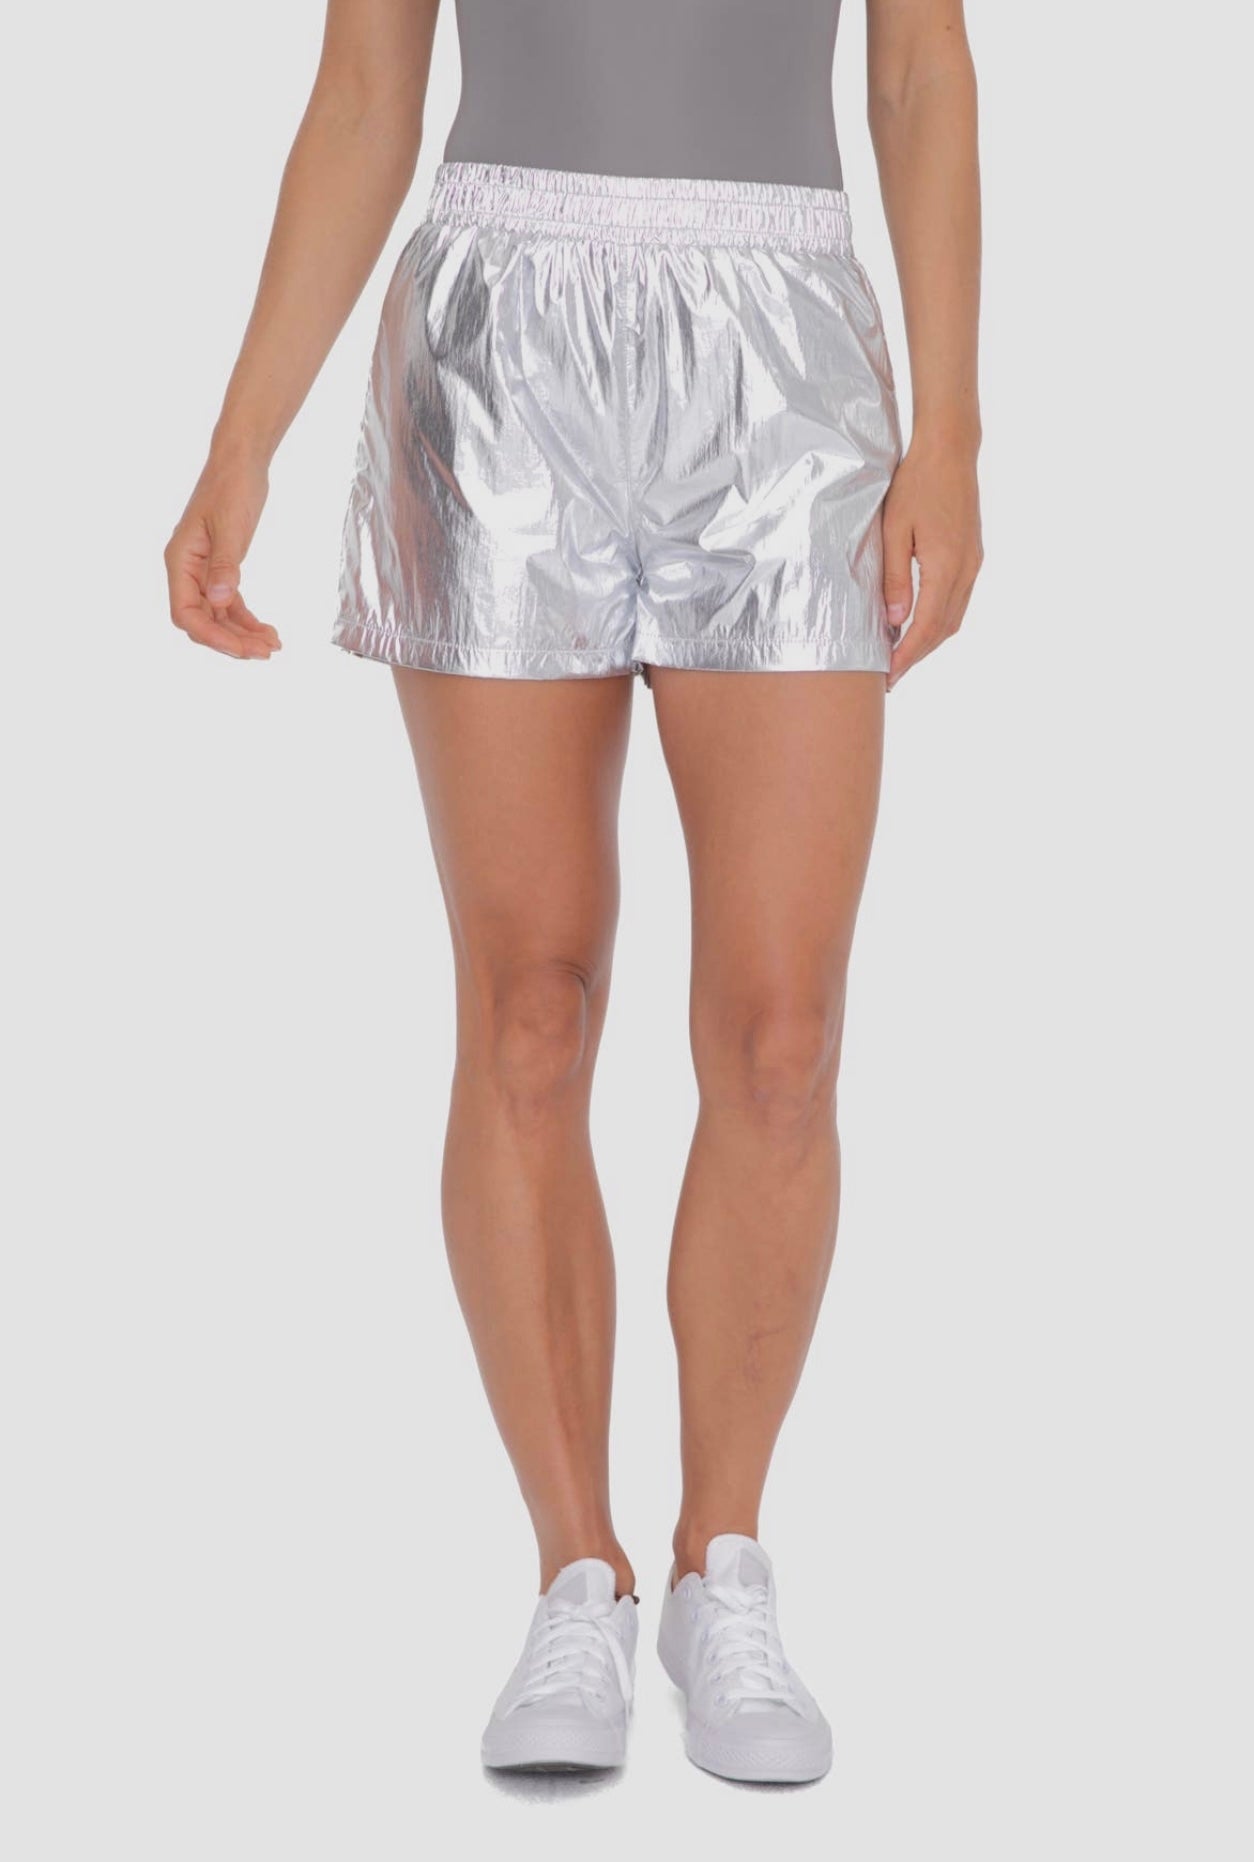 Retro Metallic Silver Shorts